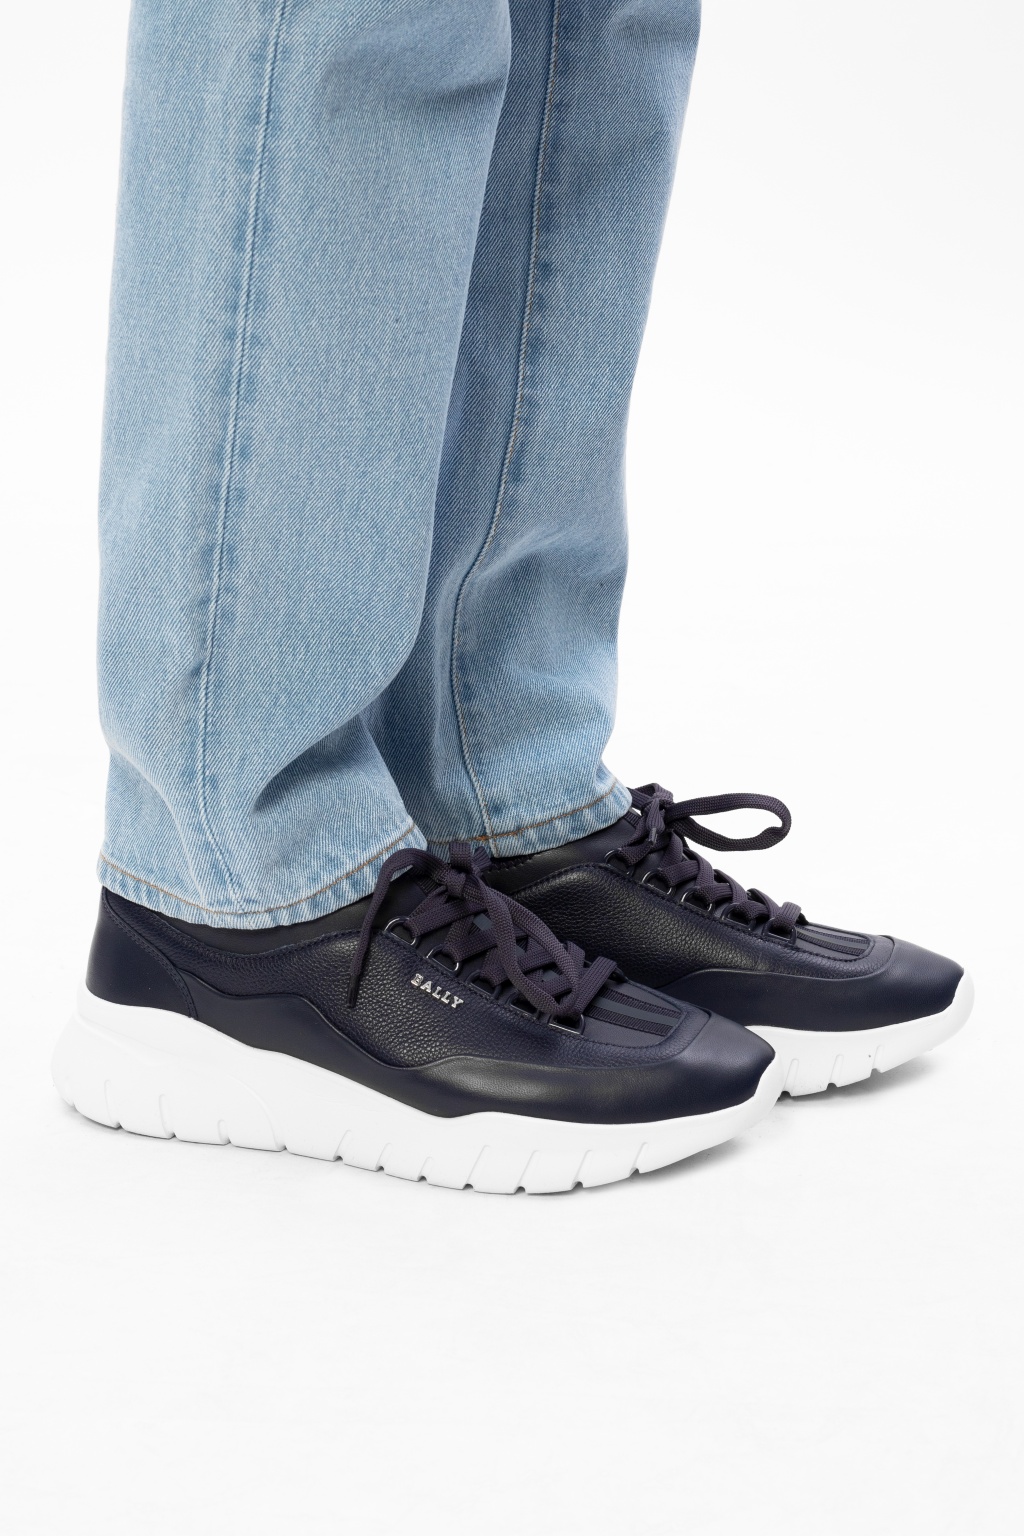 Bally ‘Bikki’ platform sneakers | Men's Shoes | Vitkac